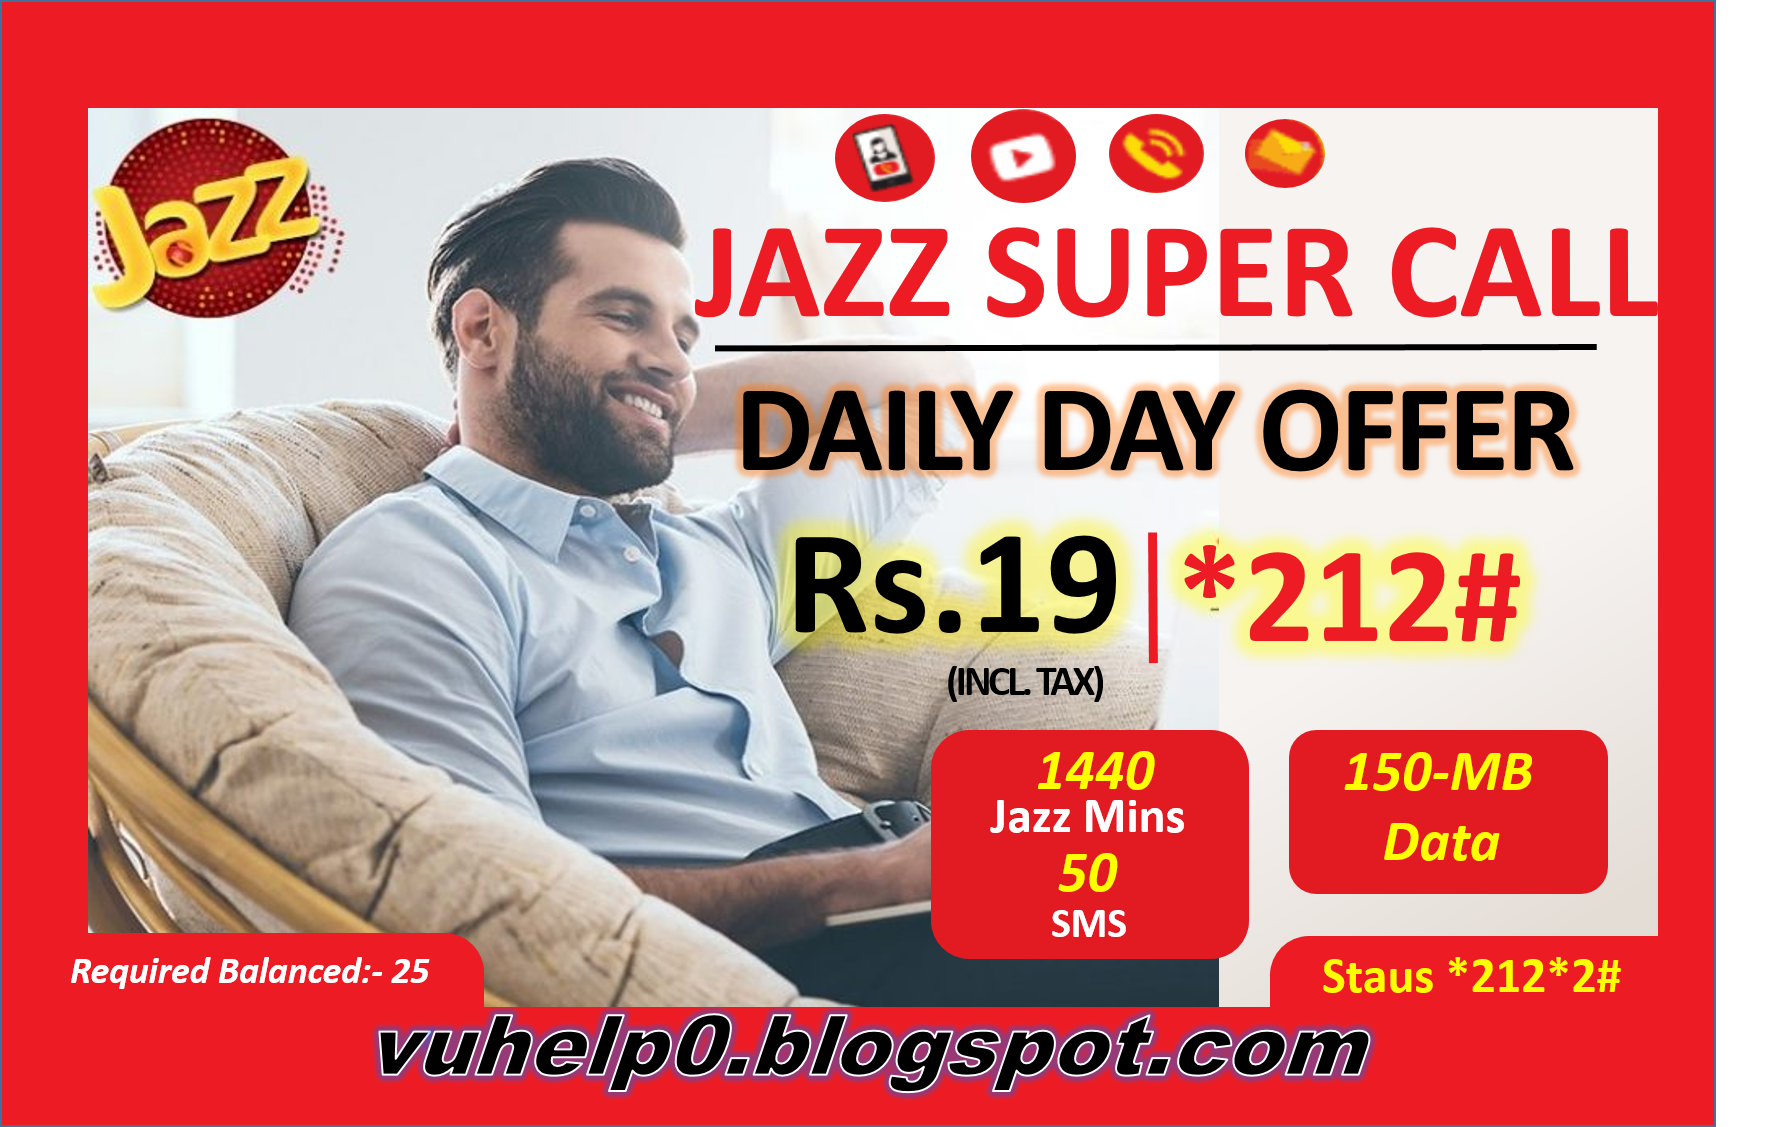 Jazz Super Call Offer & Jazz Daily Day Offer | Jazz *212# Offer